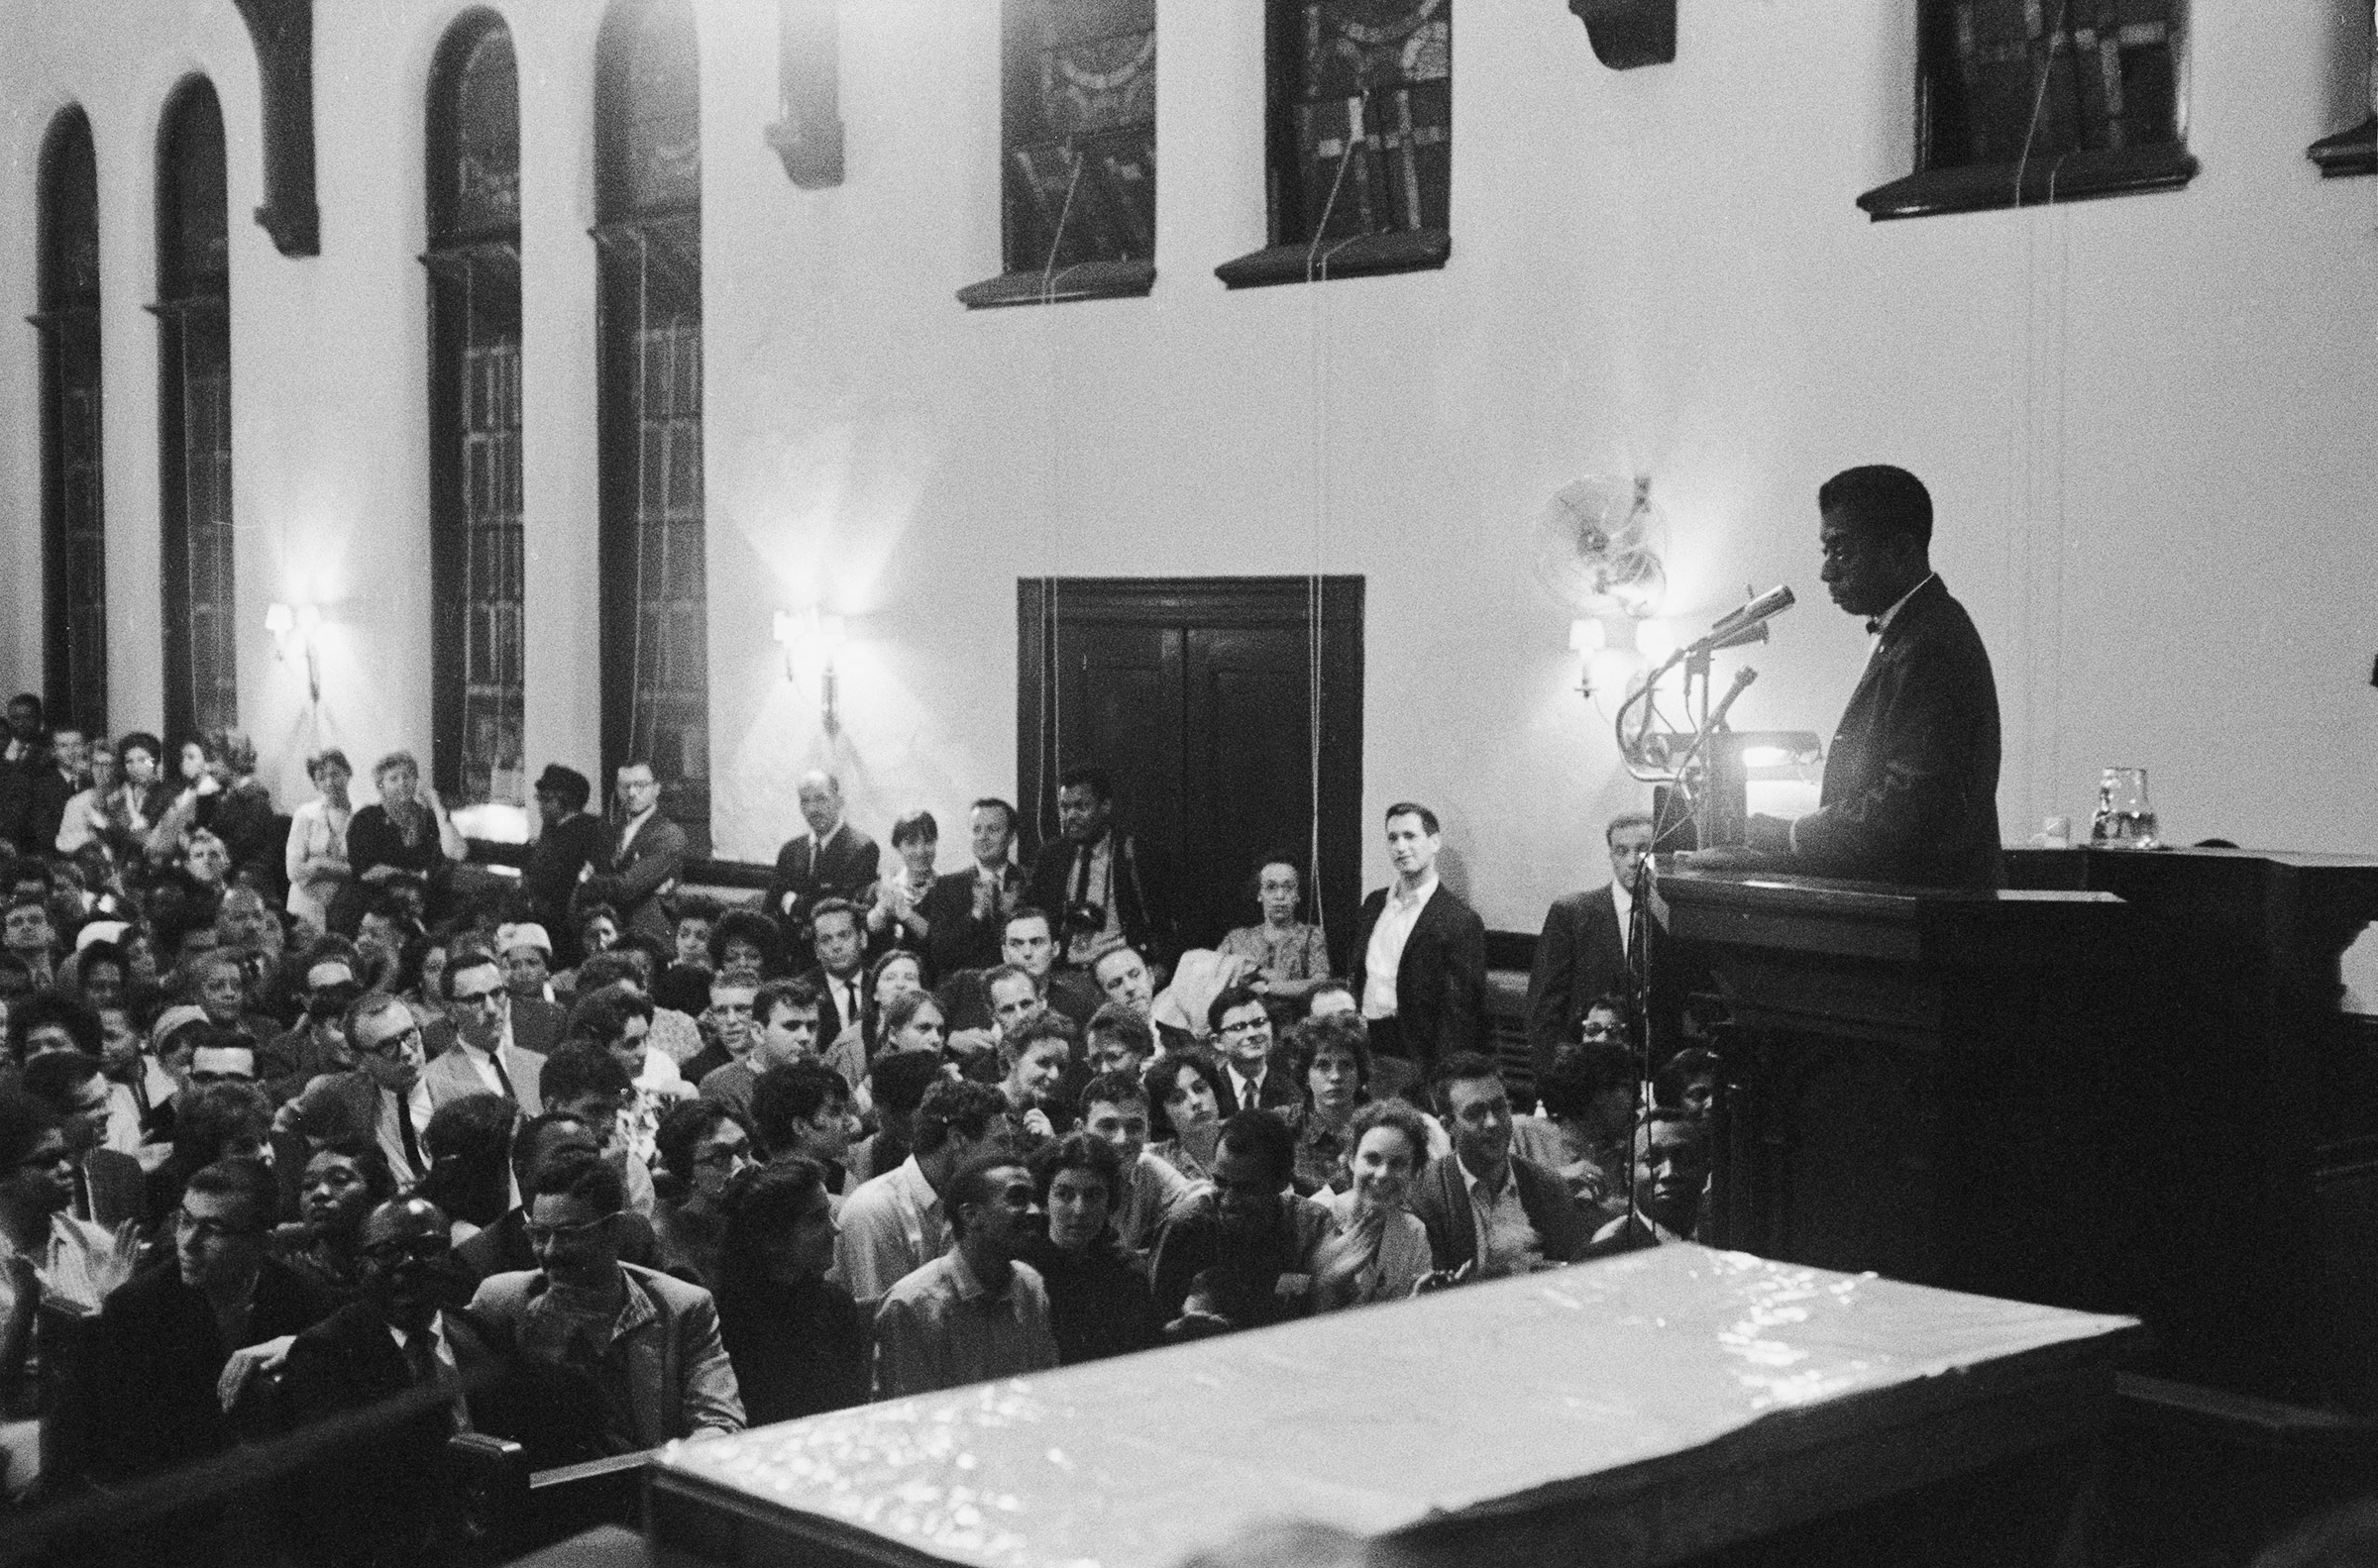 James Baldwin addresses an audience in a church, Oct. 1963.